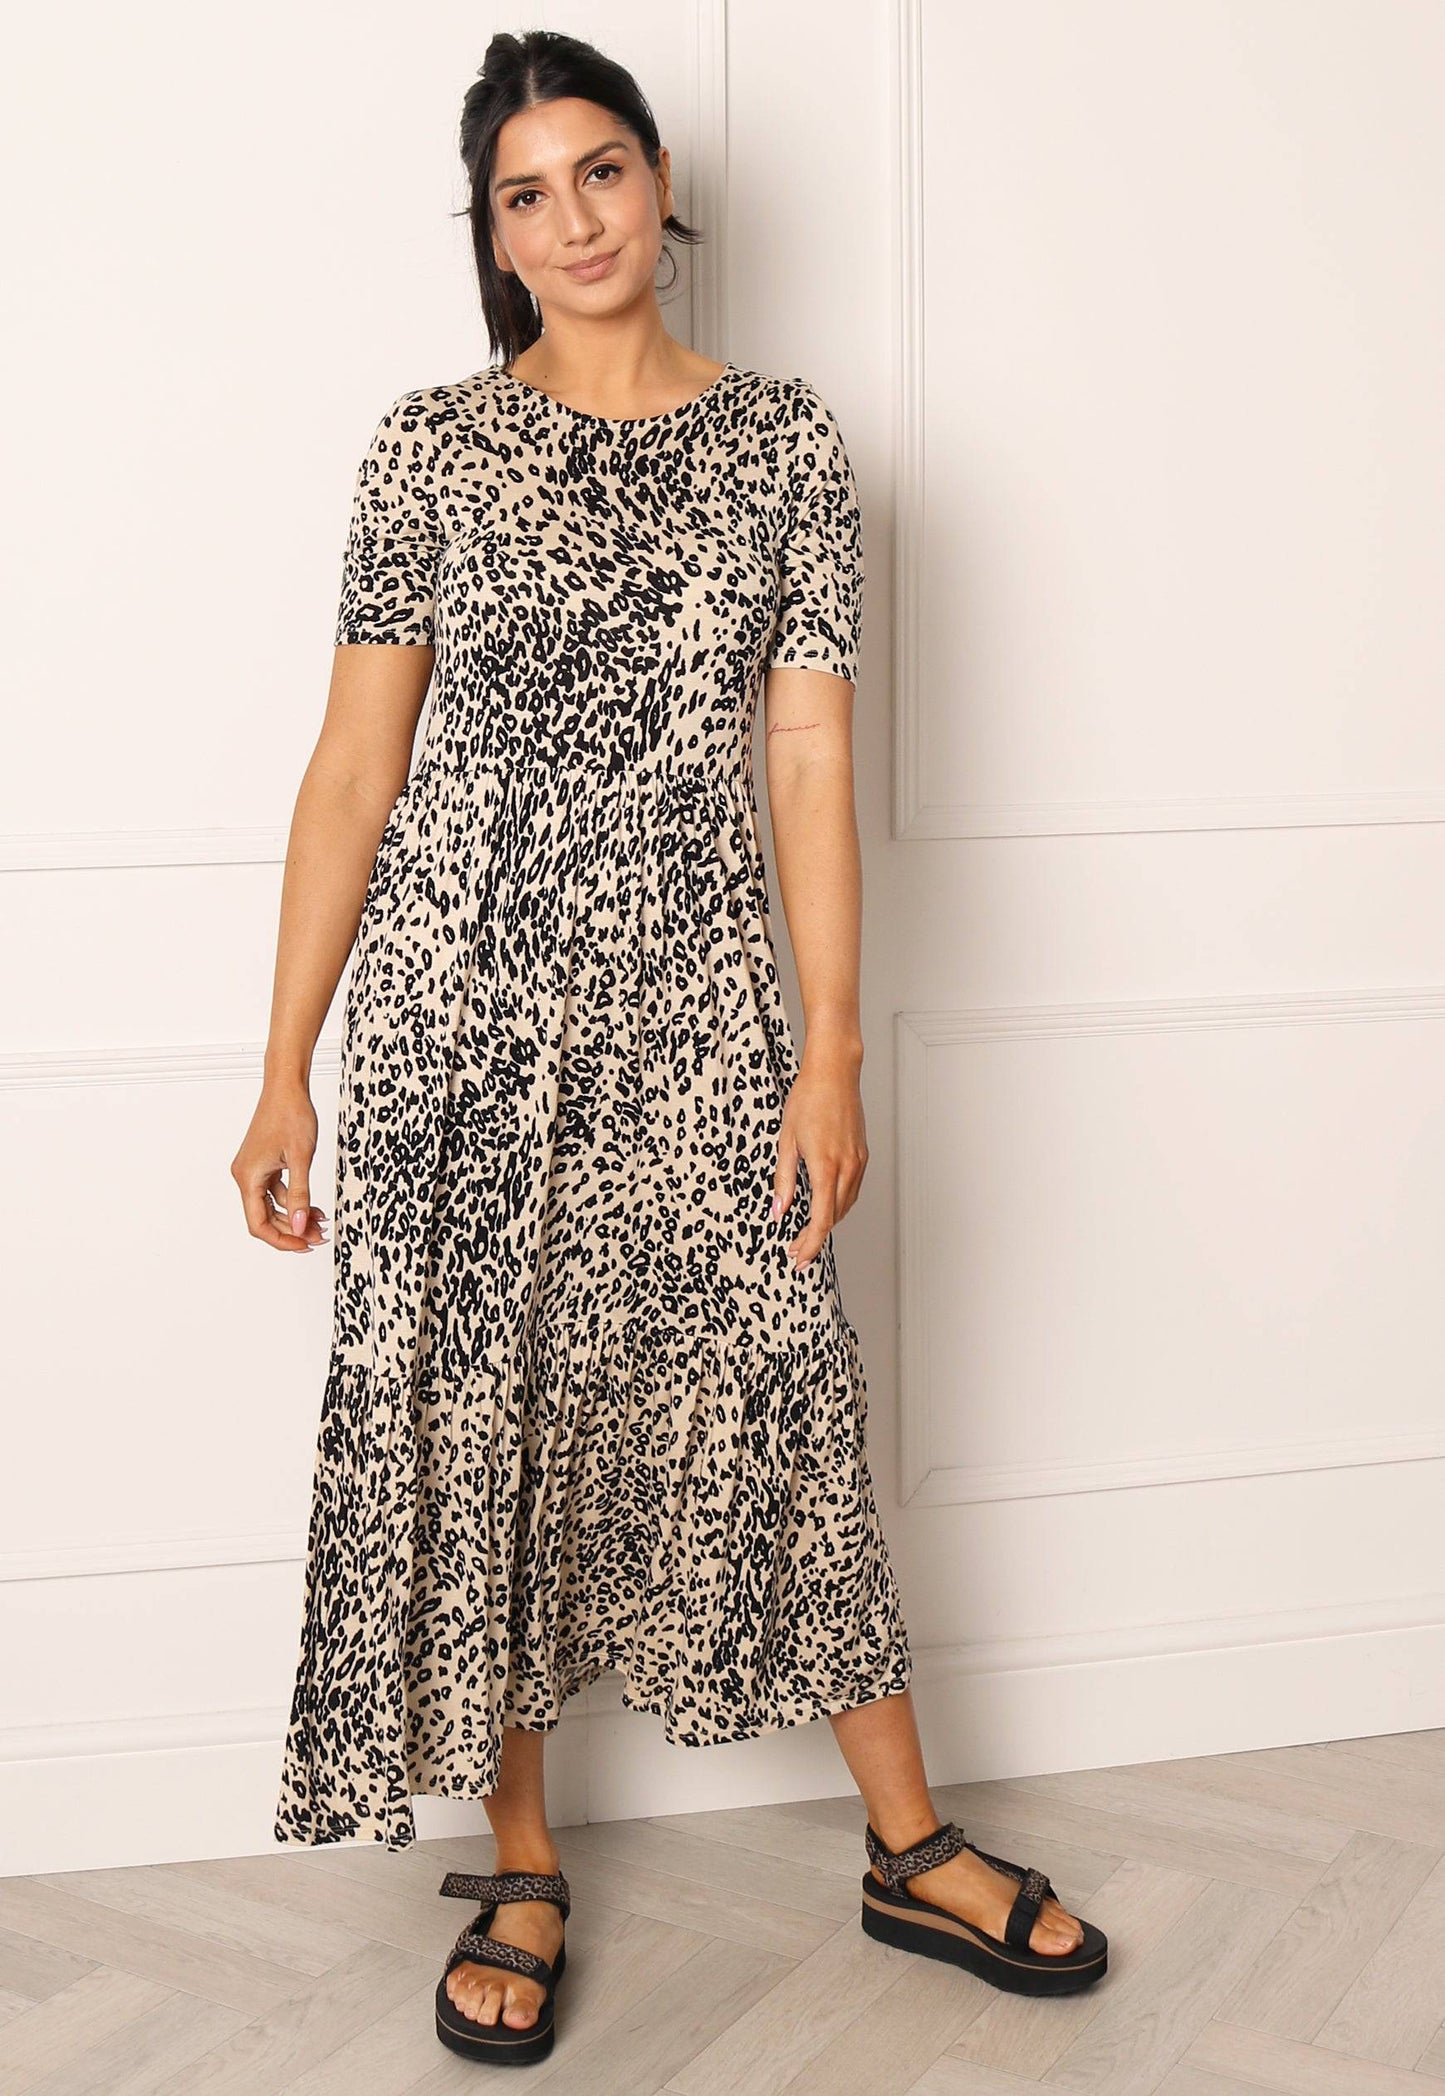 VERO MODA Mitsi Leopard Print Tiered Jersey Midi Summer Dress in Beige & Black - concretebartops